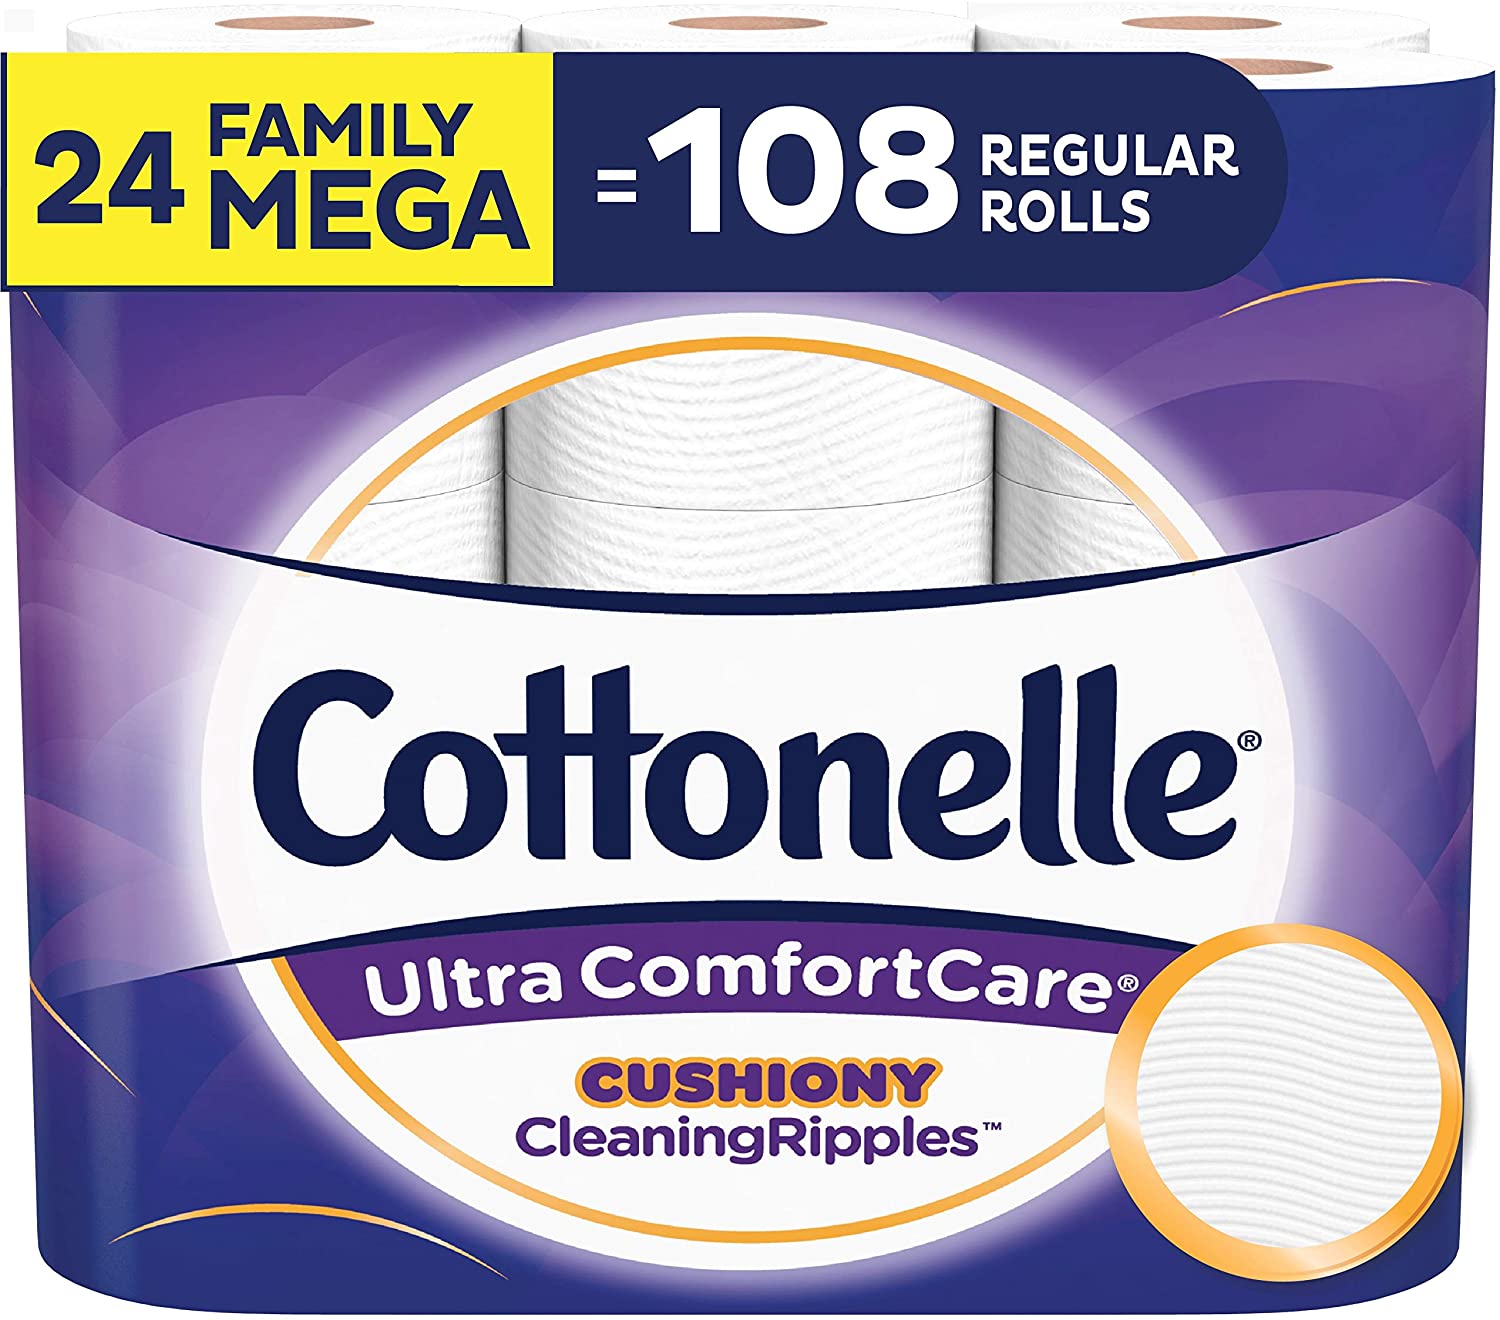 Cottonelle Ultra ComfortCare Soft Toilet Paper, 24 Family Mega Rolls